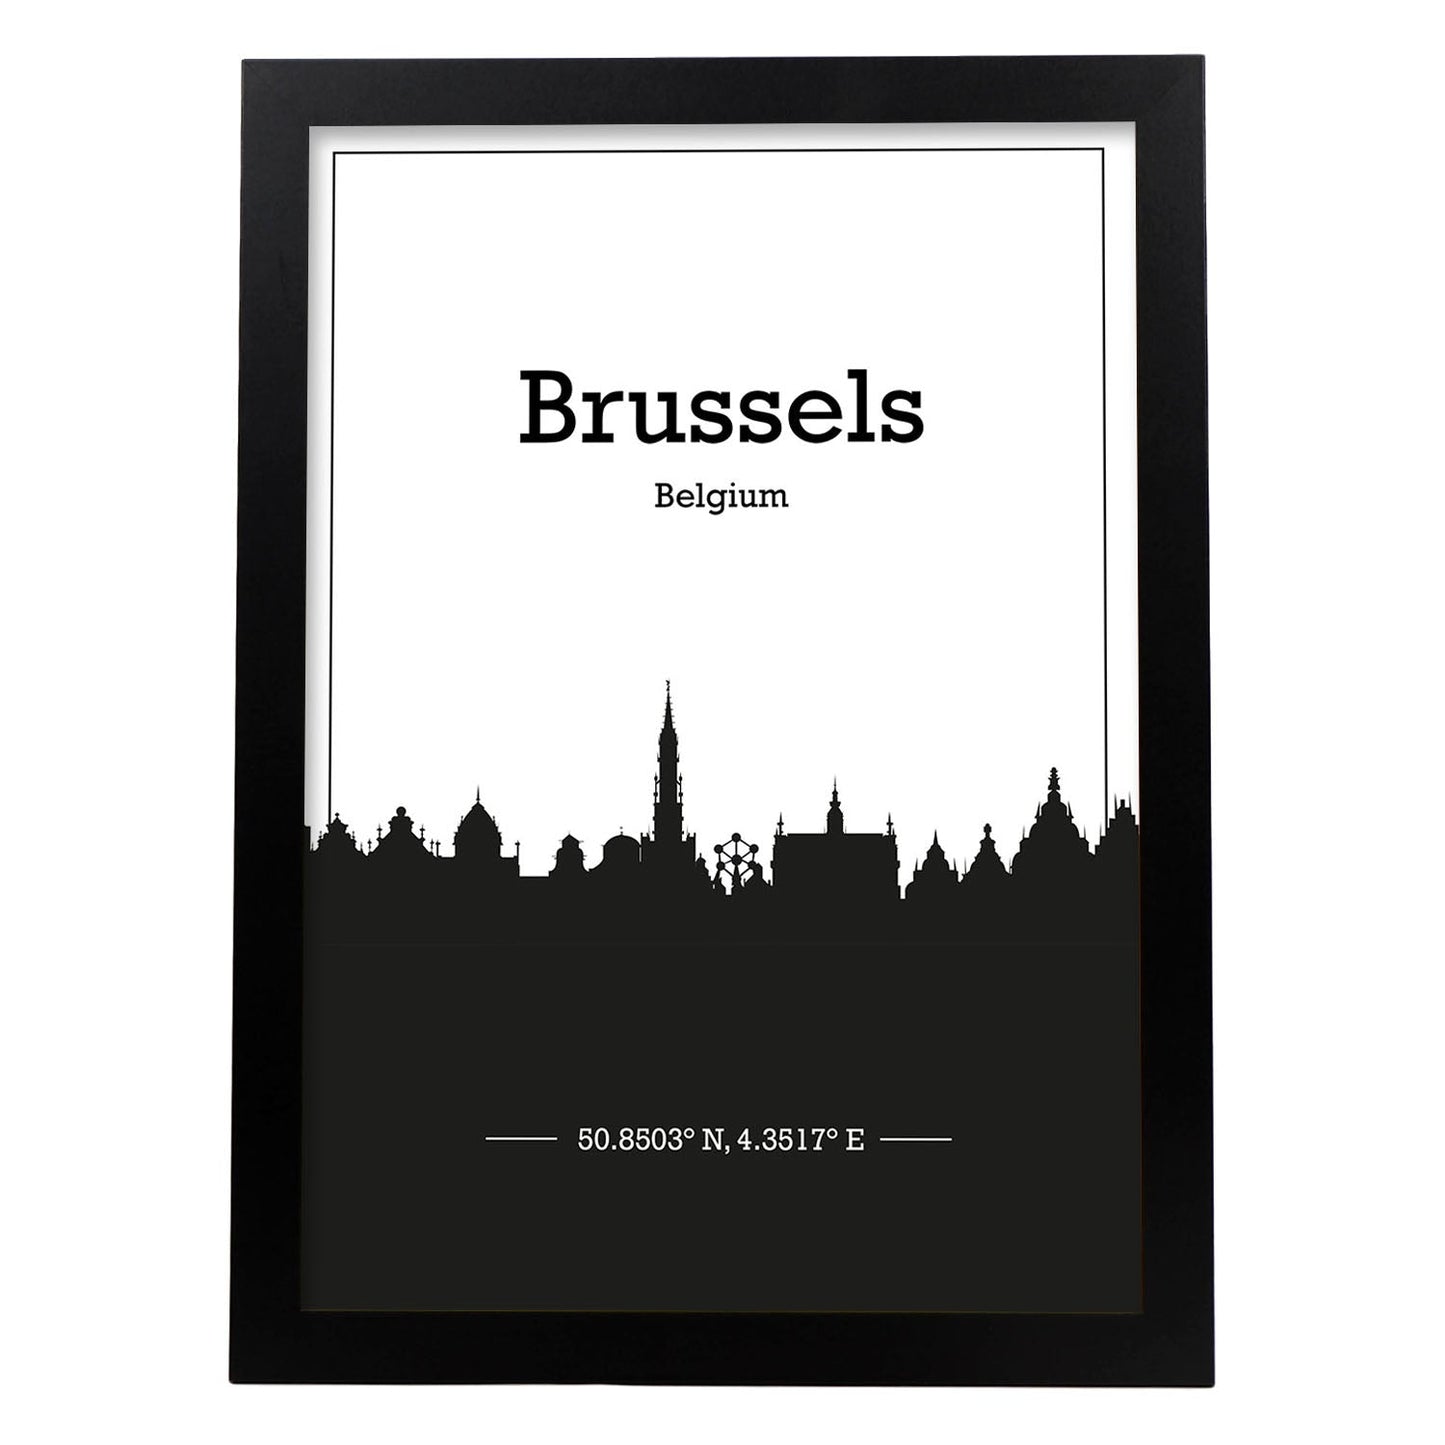 Poster con mapa de Brussels - Belgica. Láminas con Skyline de ciudades de Europa con sombra negra.-Artwork-Nacnic-A4-Marco Negro-Nacnic Estudio SL